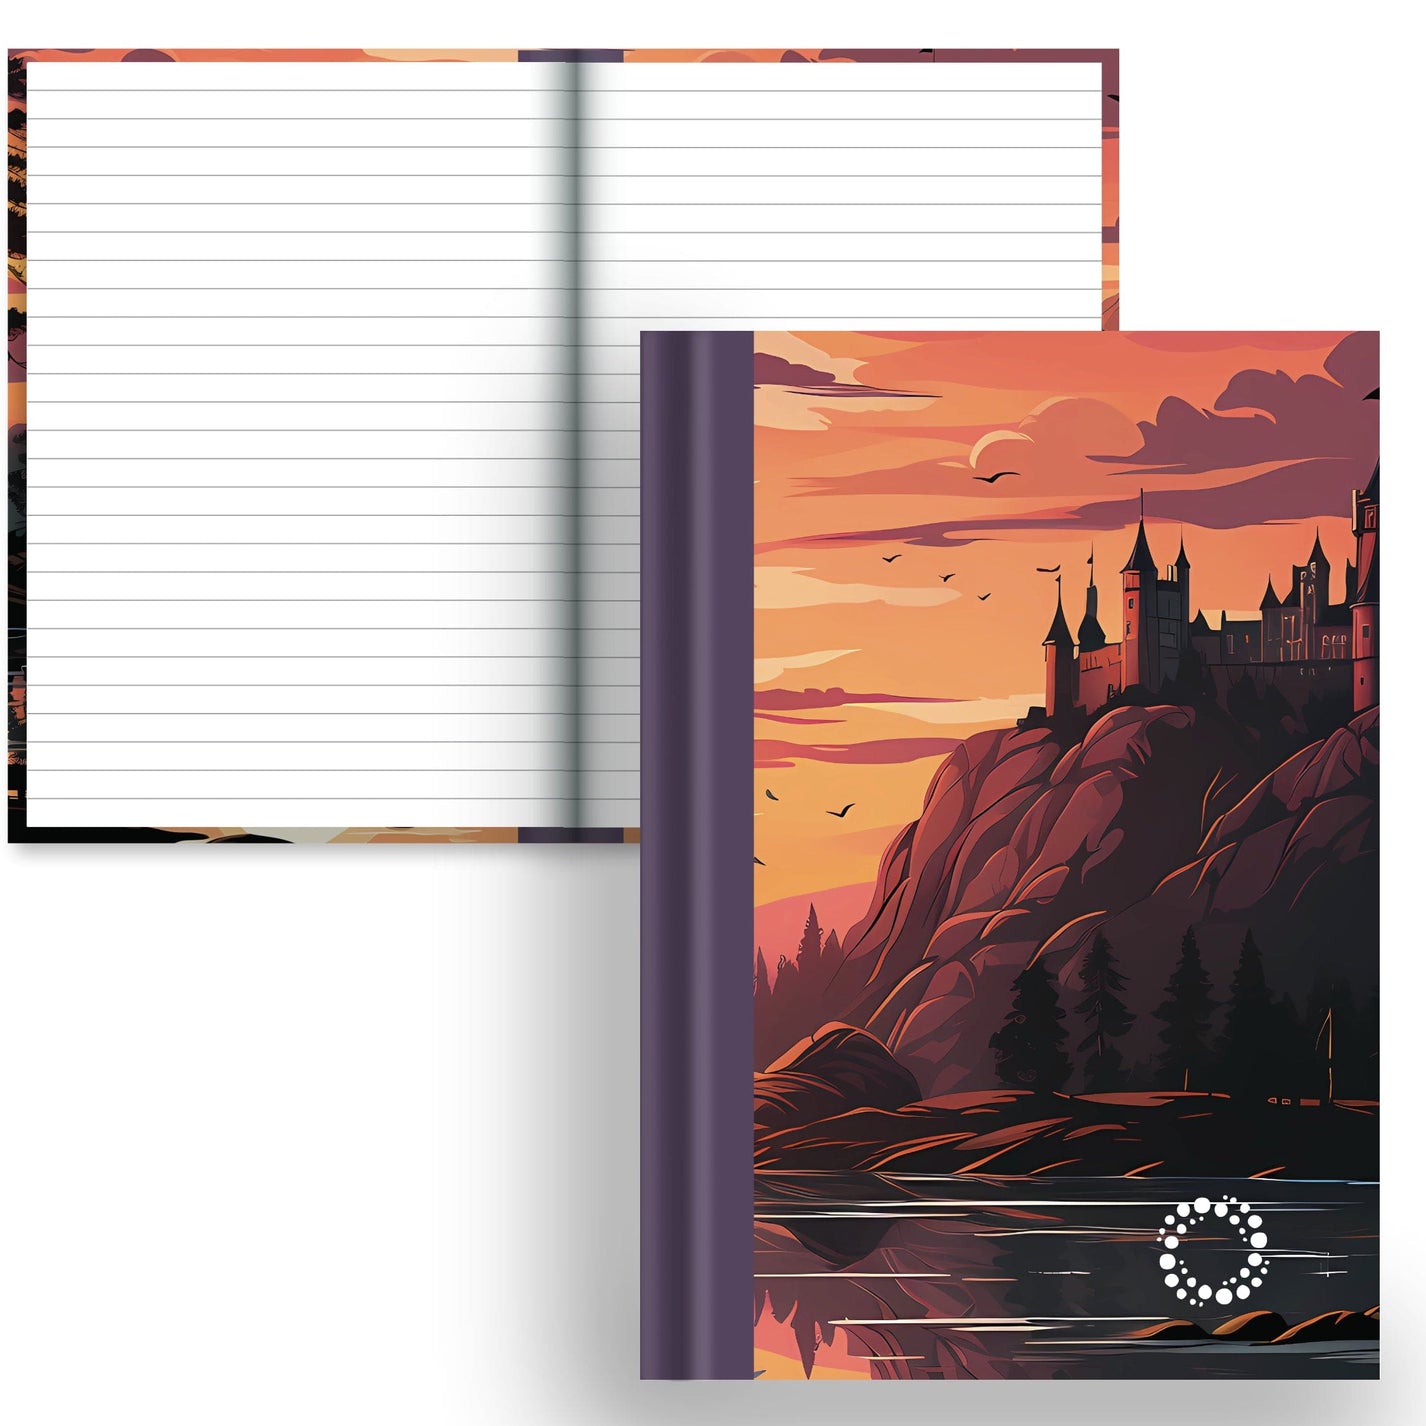 DayDot Journals Lined Paper Avalon - A5 Hardback Notebook